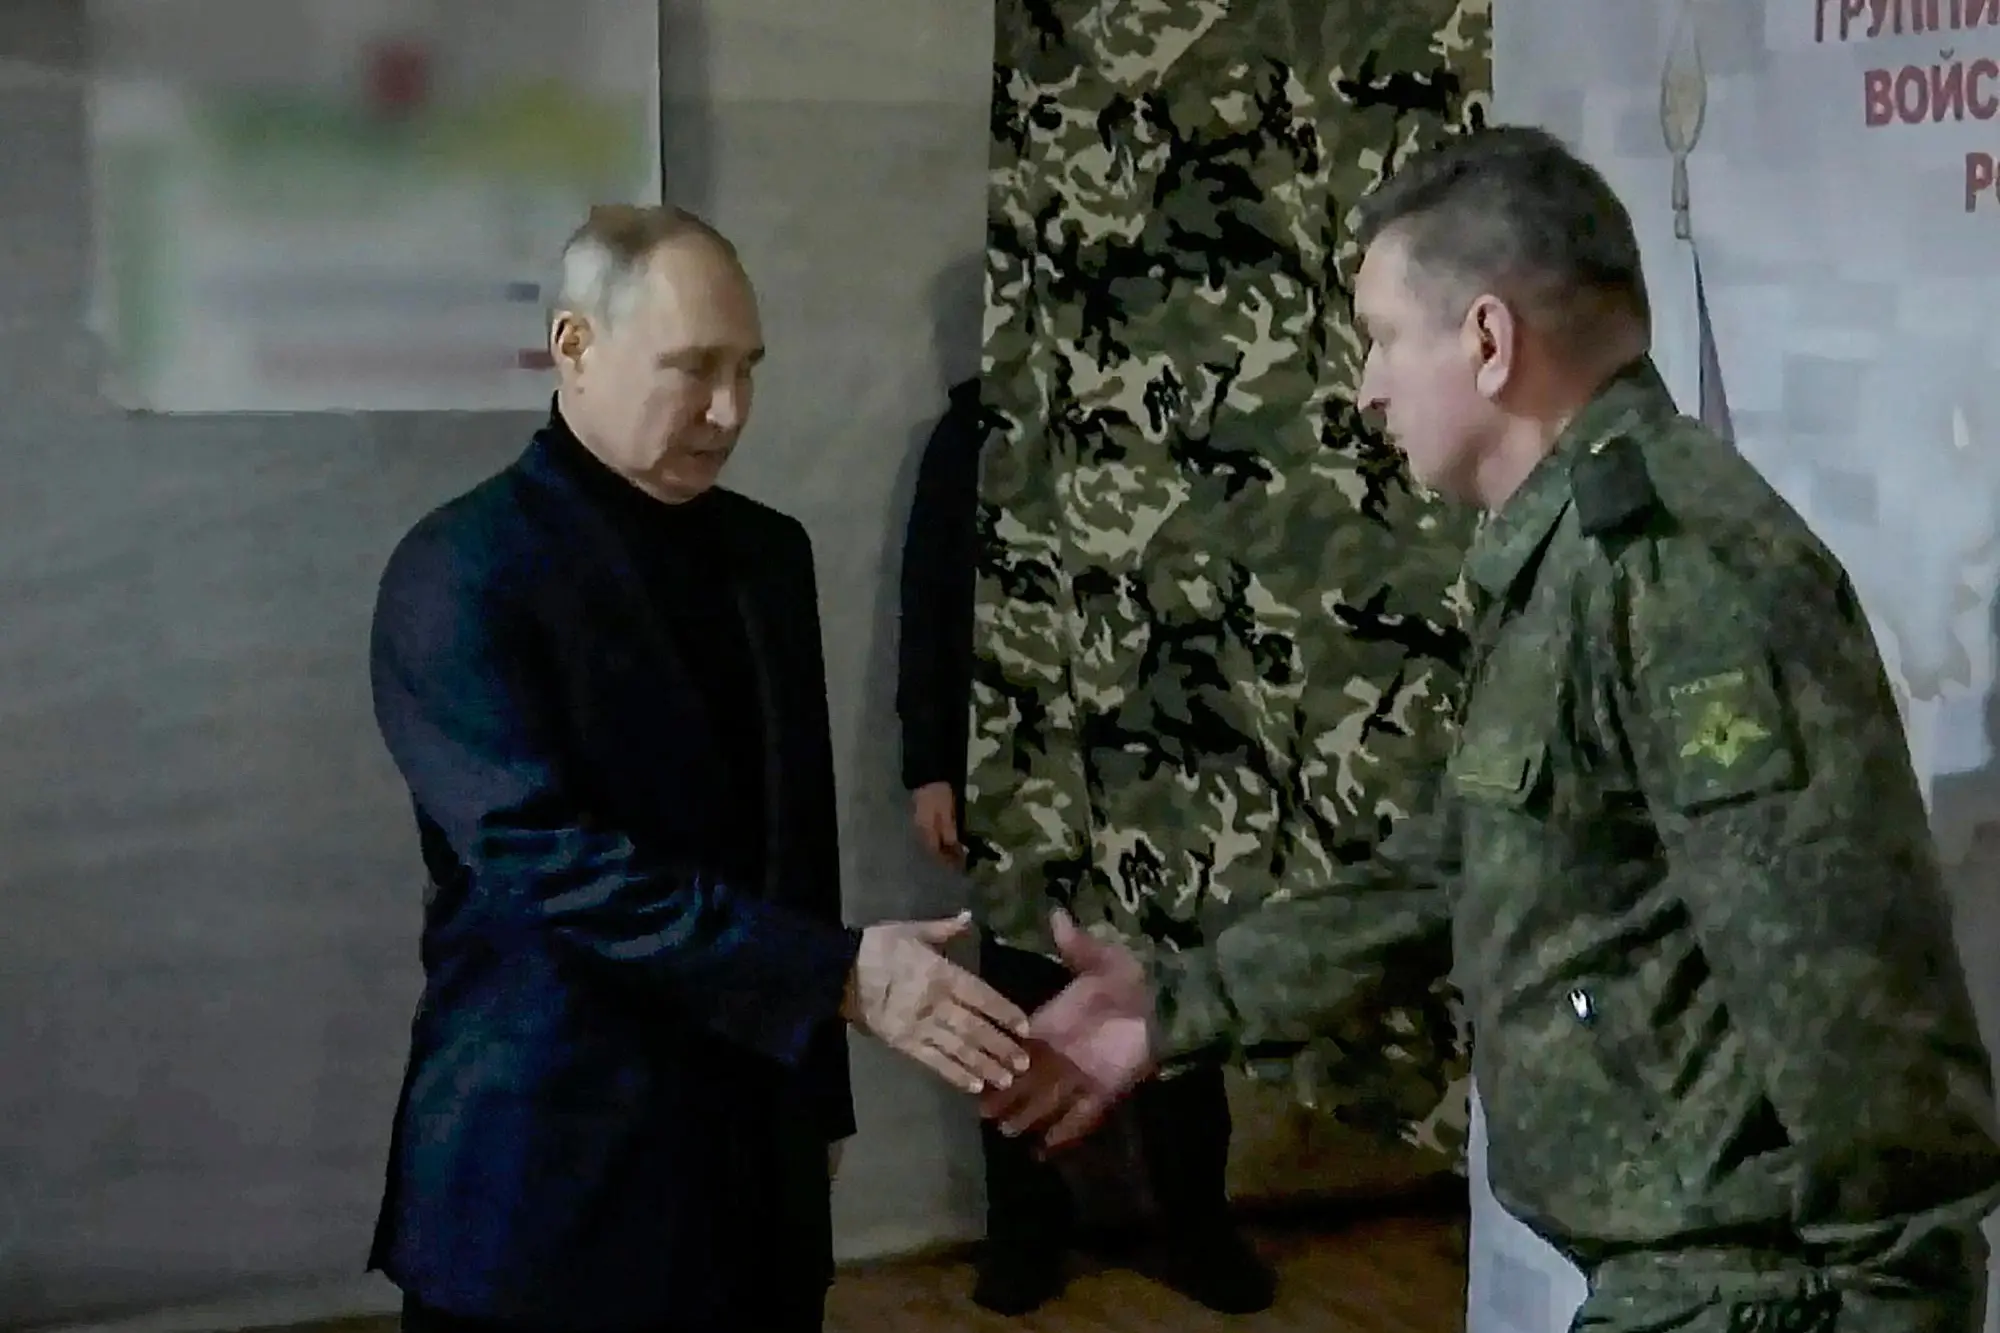 Putin in visita alle basi russe in Ucraina (foto Ansa/Epa)